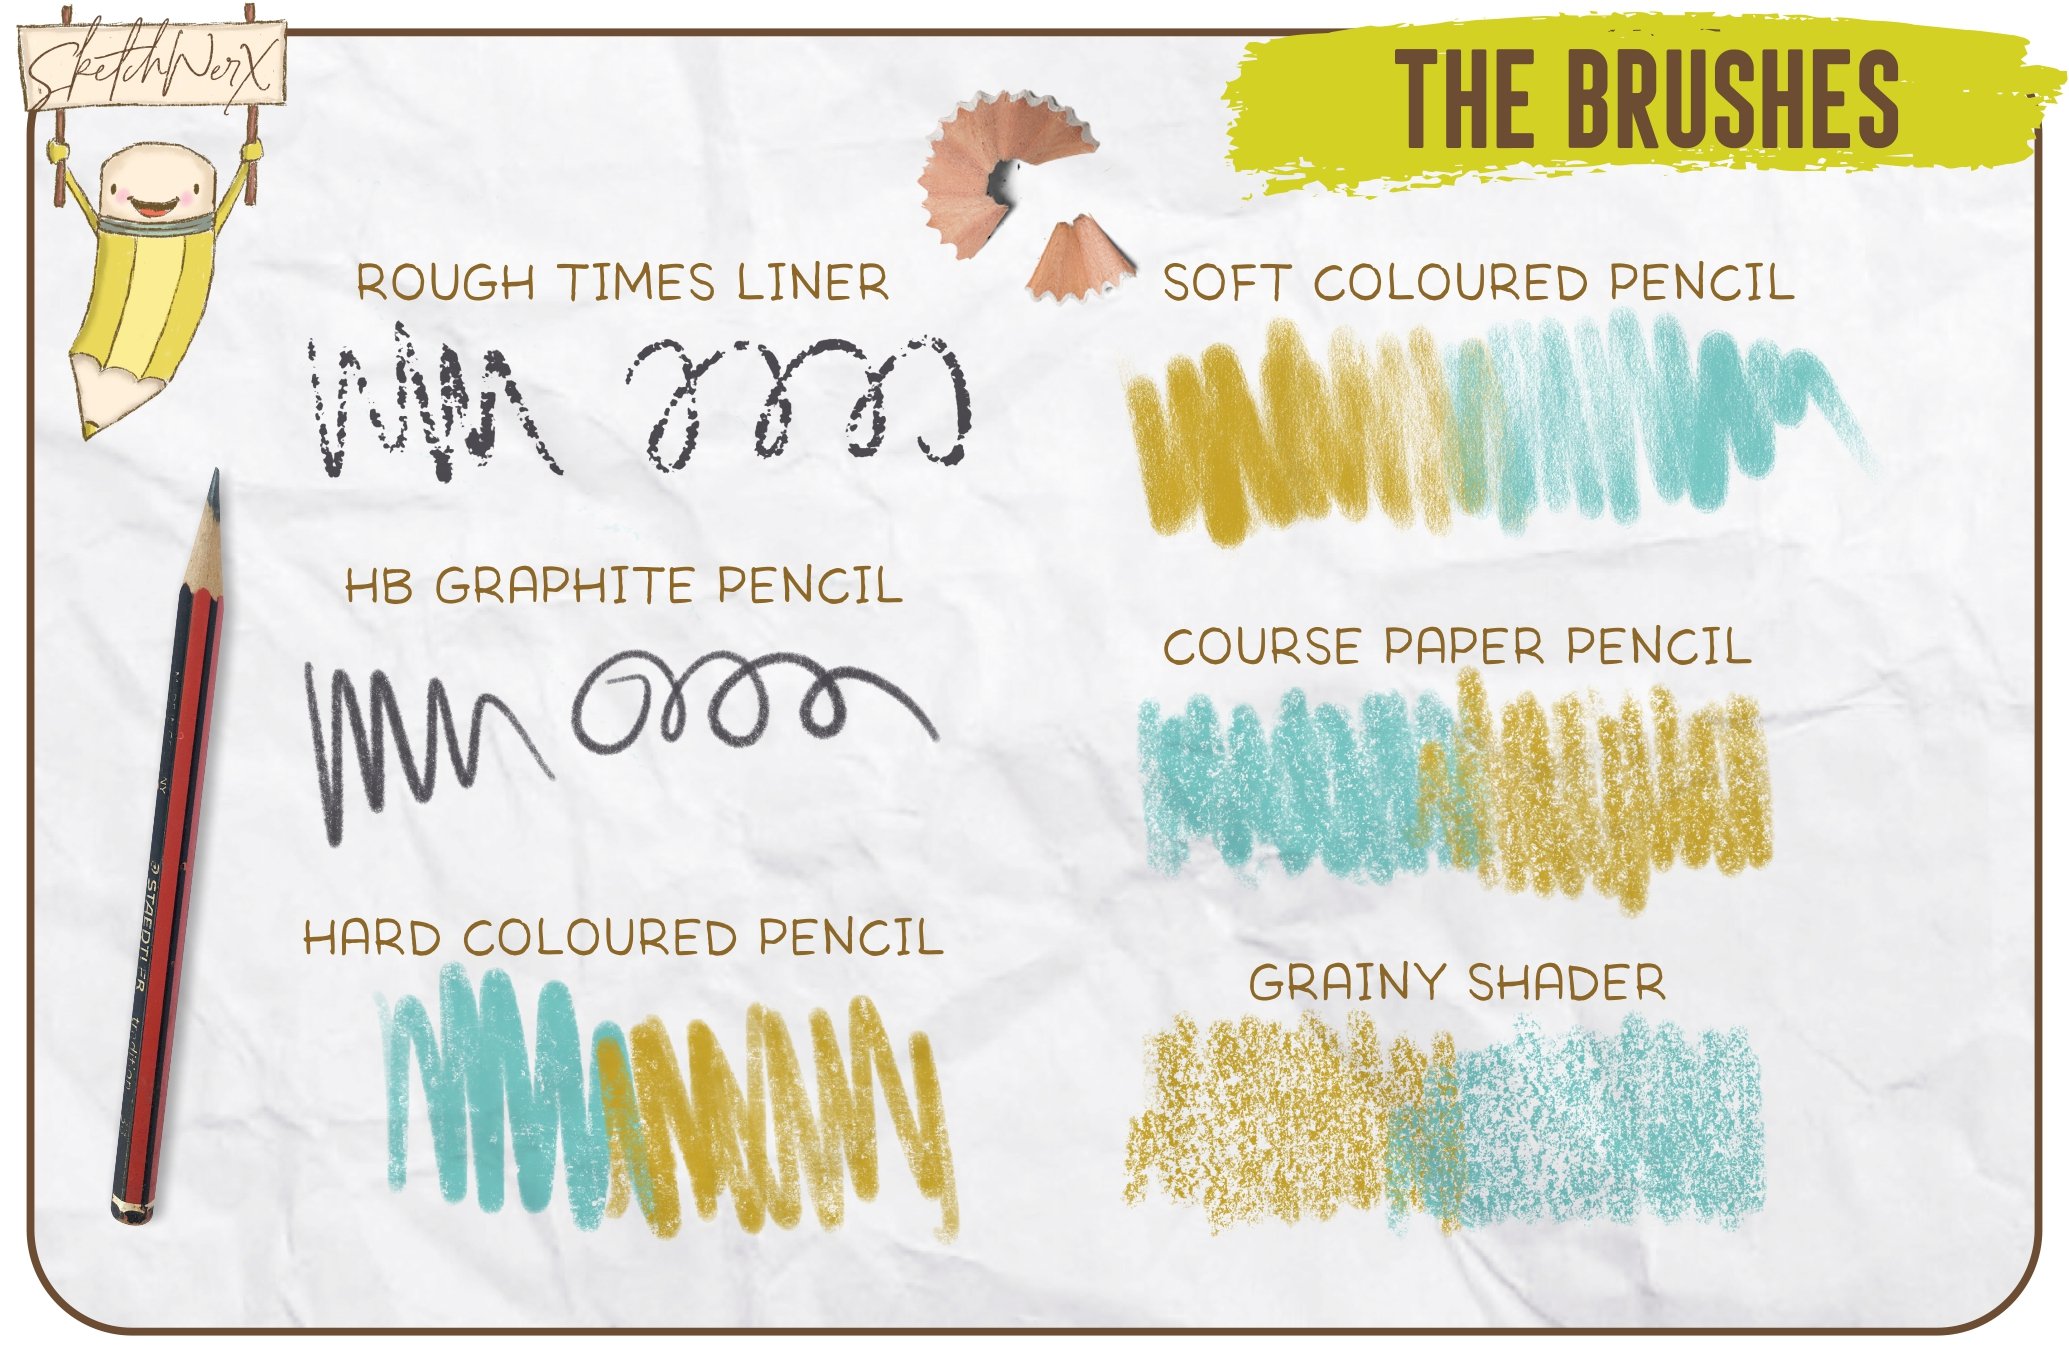 Coloured Pencil Artist Set - For Procreate